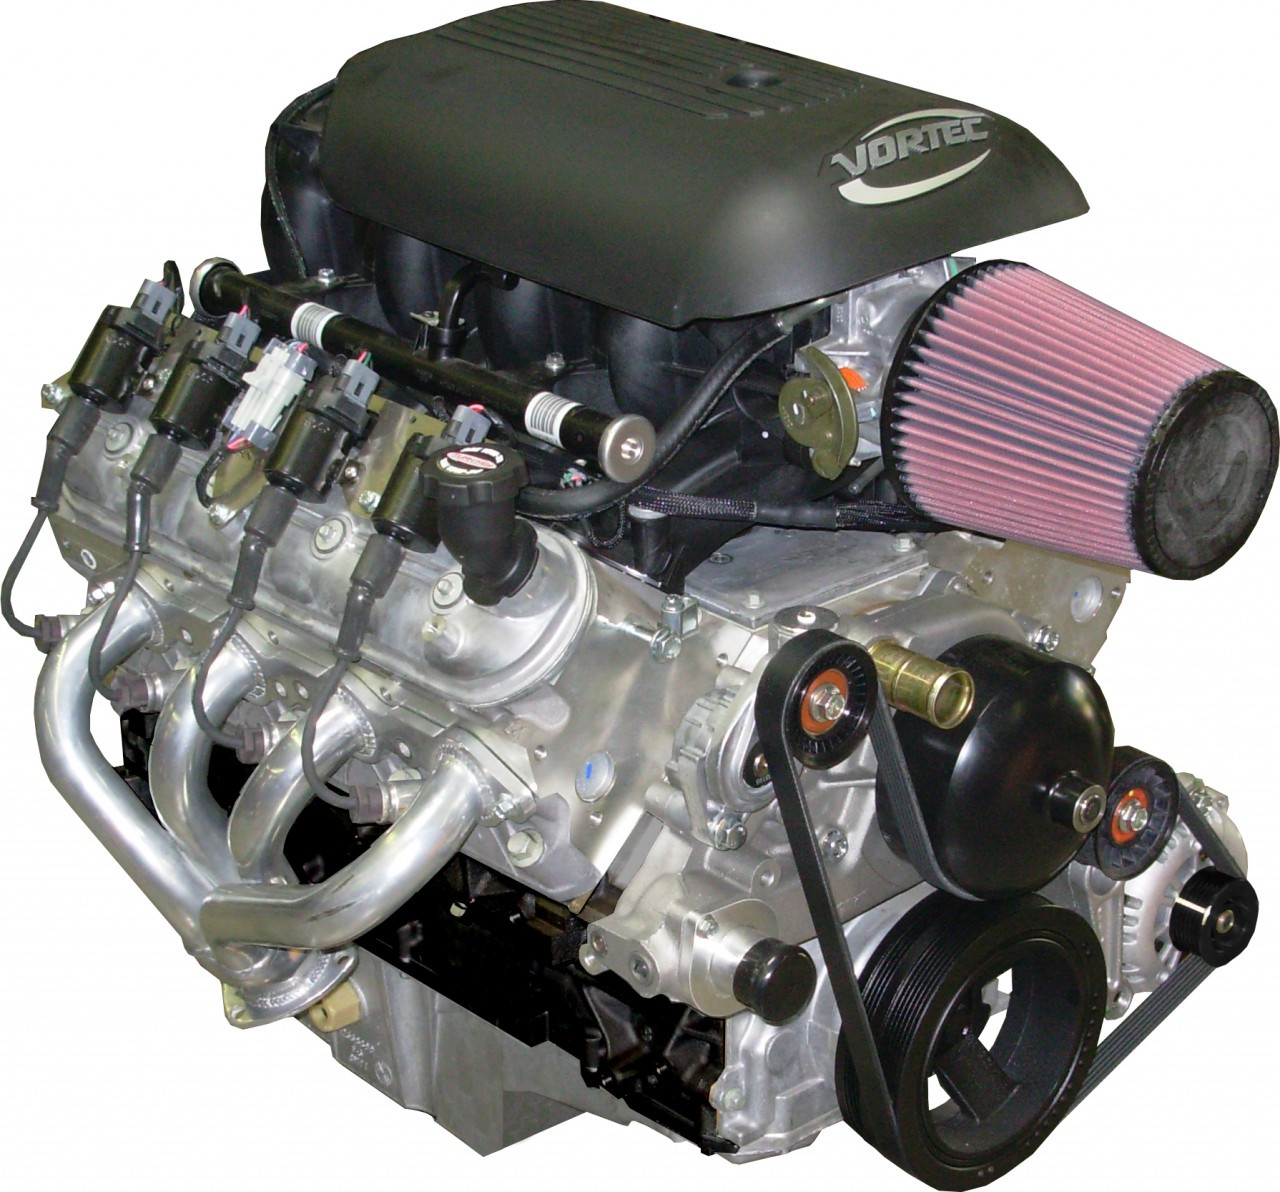 Turn Key Engine 885301 LS327 5.3L 350 HP Turn Key Engine Assembly